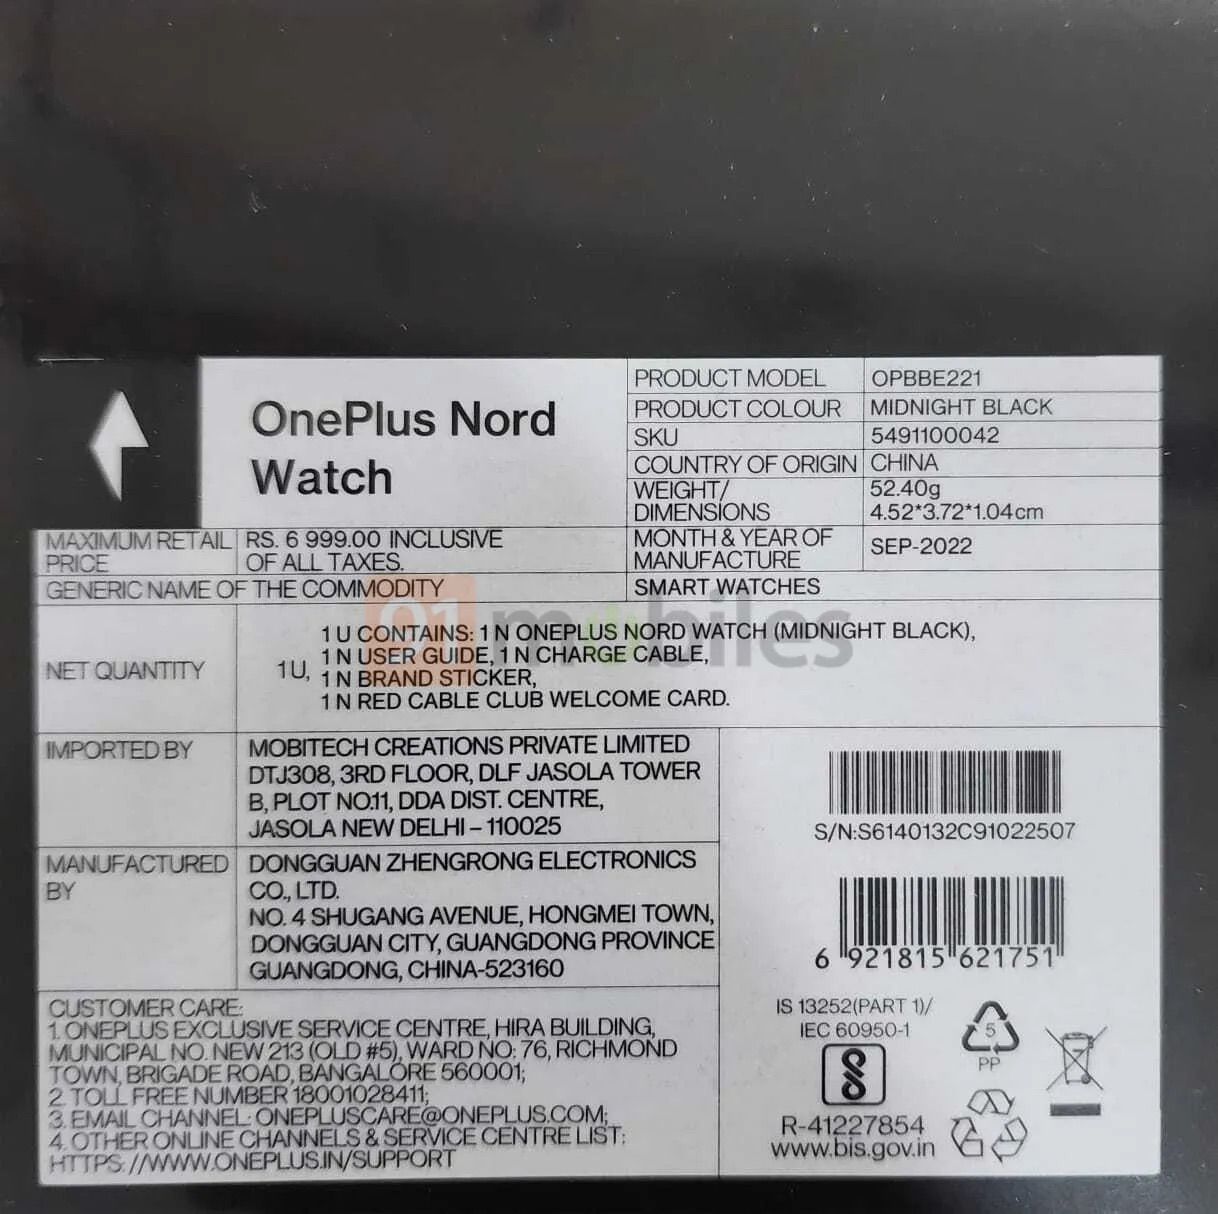 OnePlus-Nord-Watch-retail-box-leak